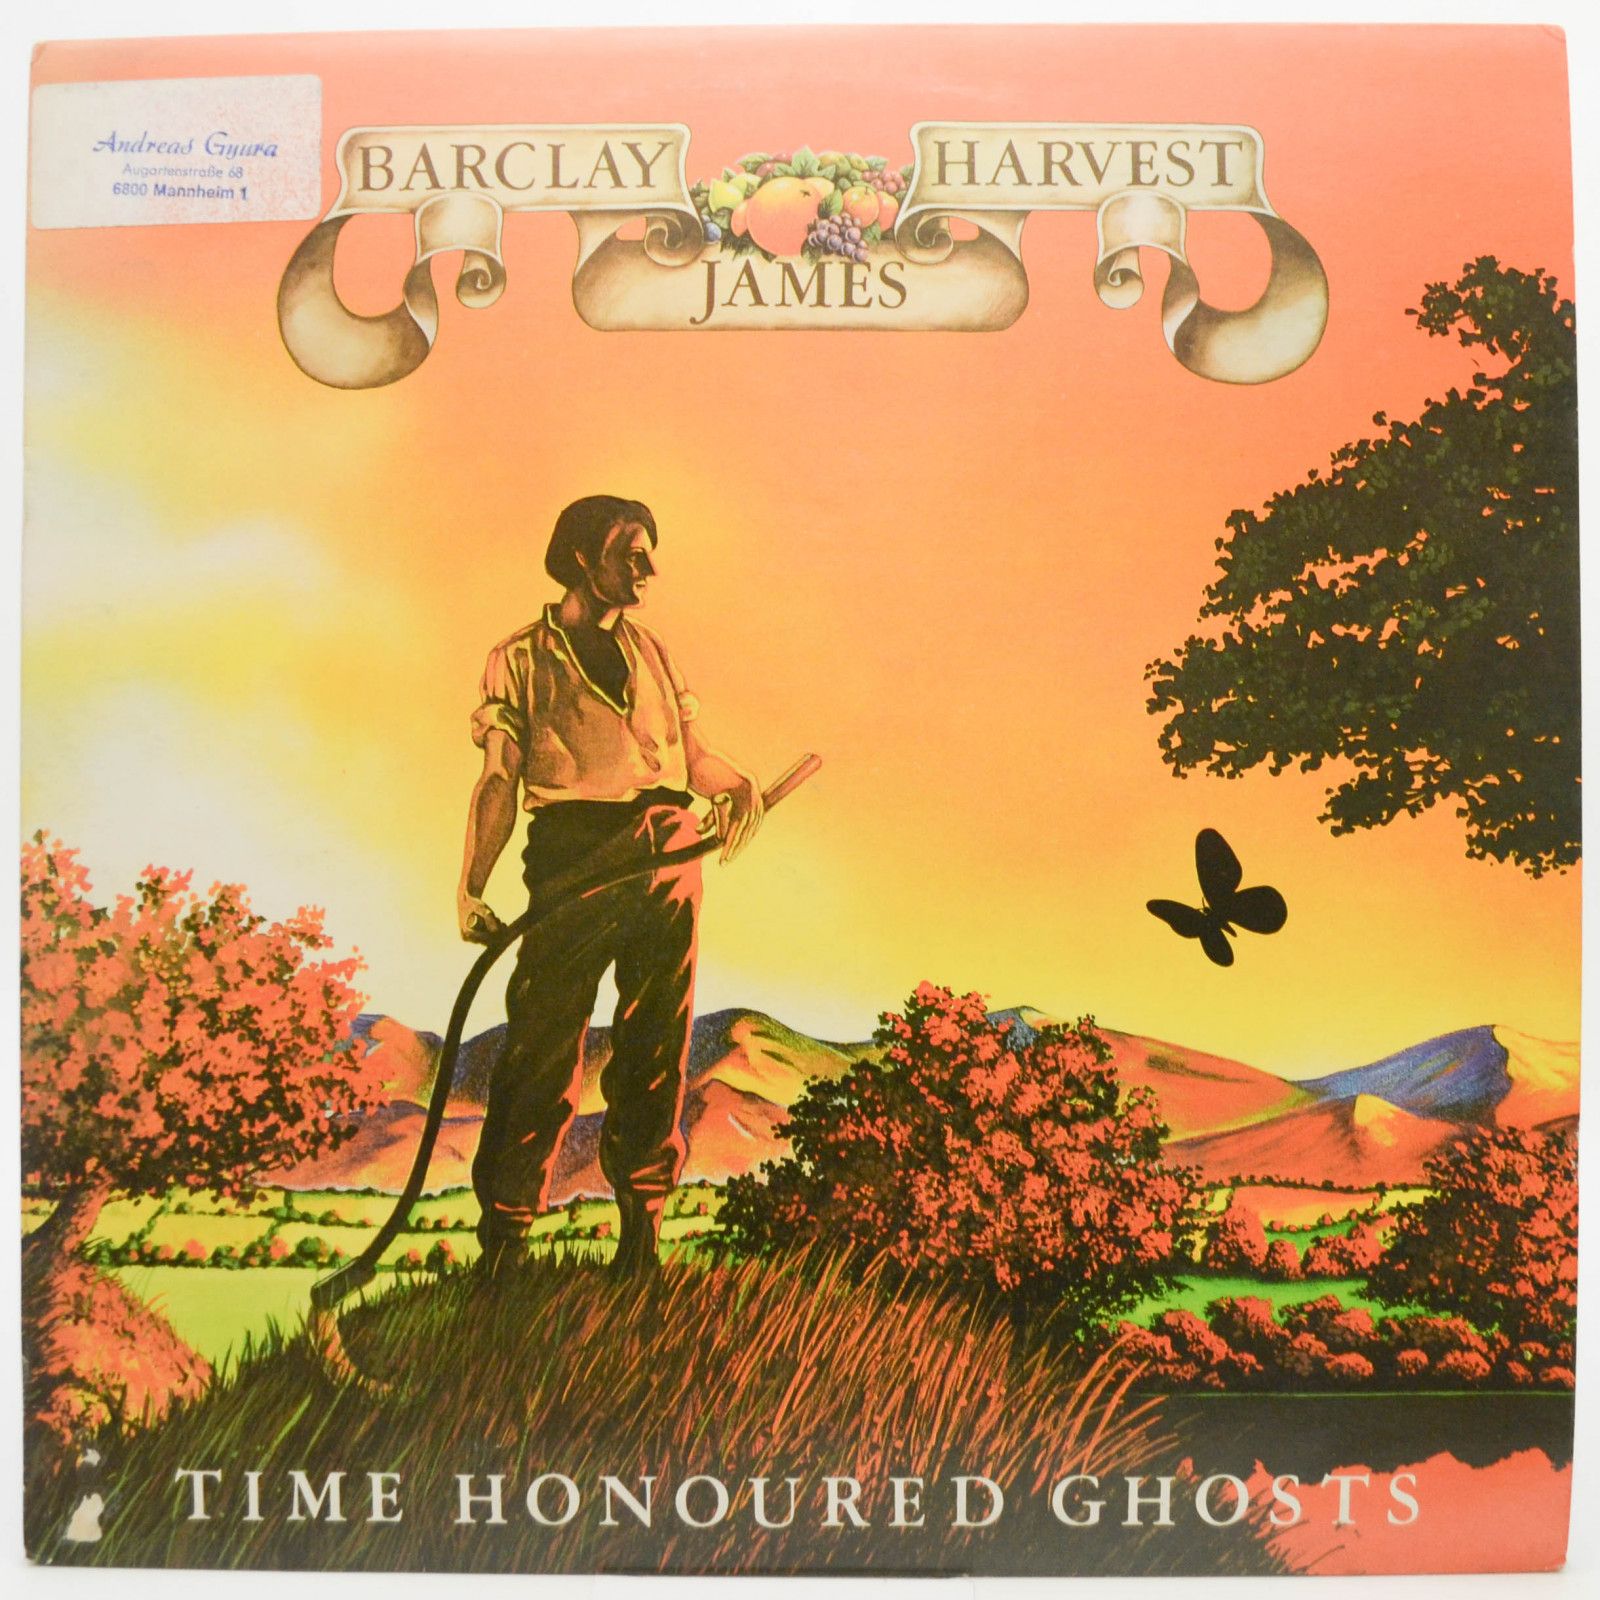 Barclay James Harvest — Time Honoured Ghosts (UK), 1975